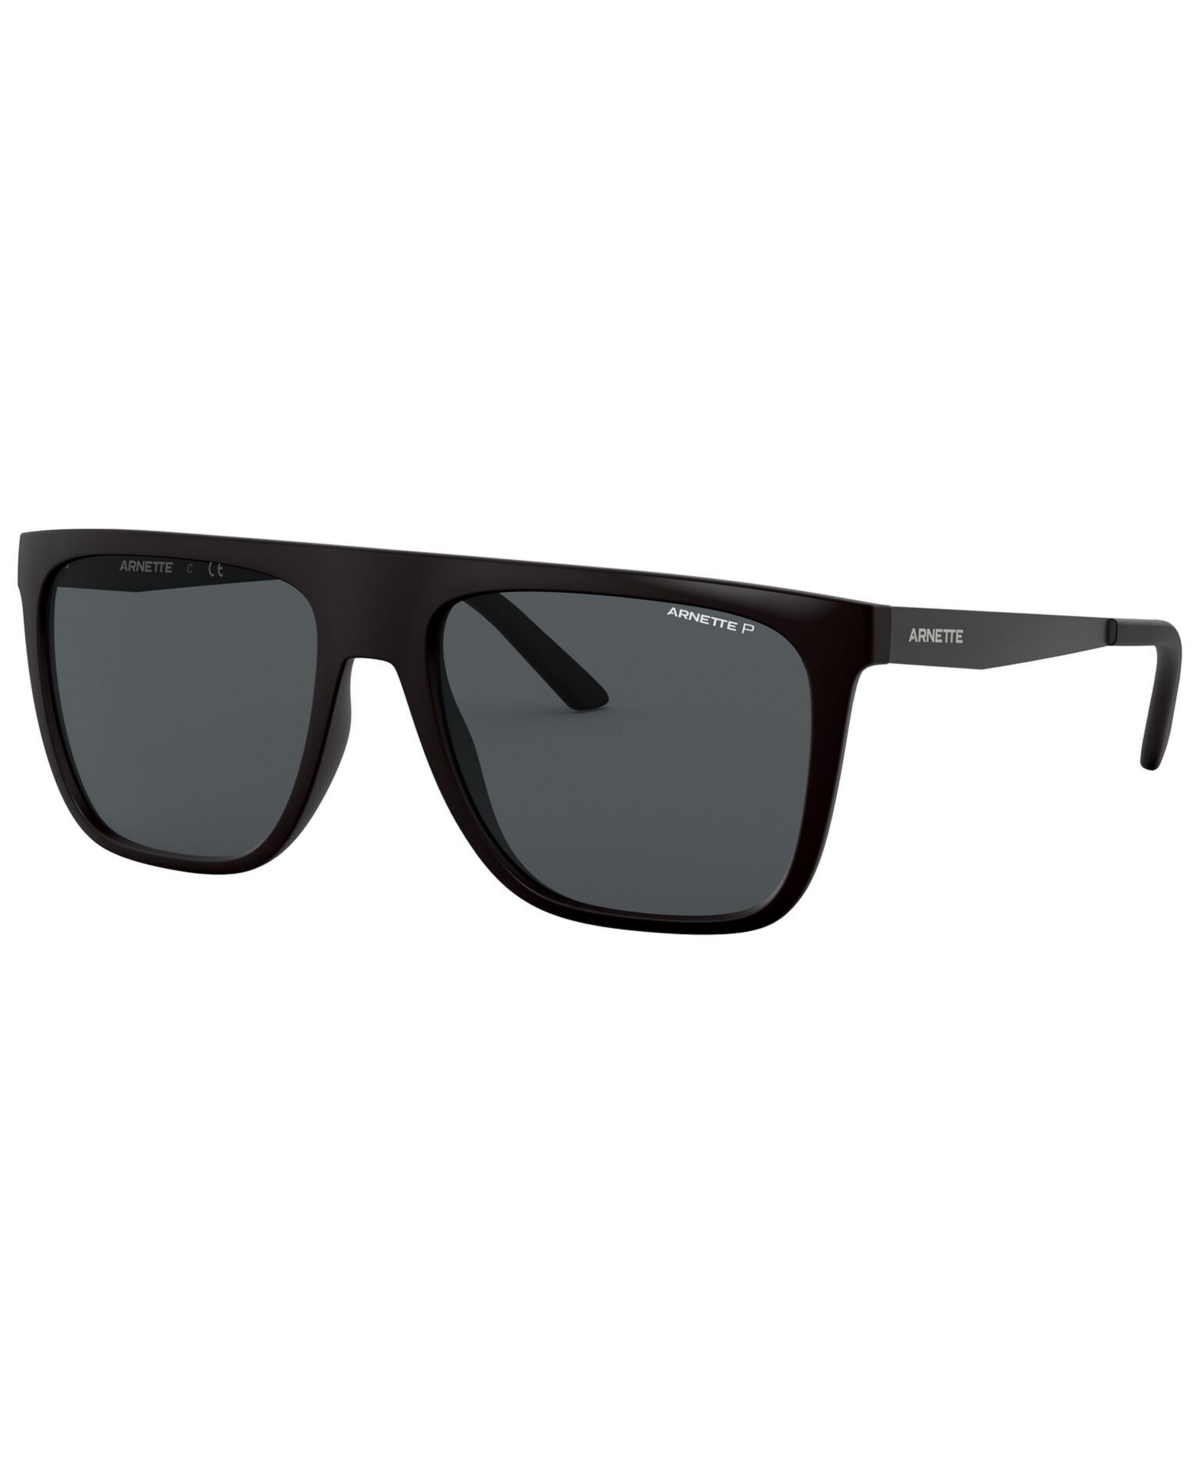 Men's Polarized Sunglasses, AN4261 - MATTE BLACK/POLAR GREY